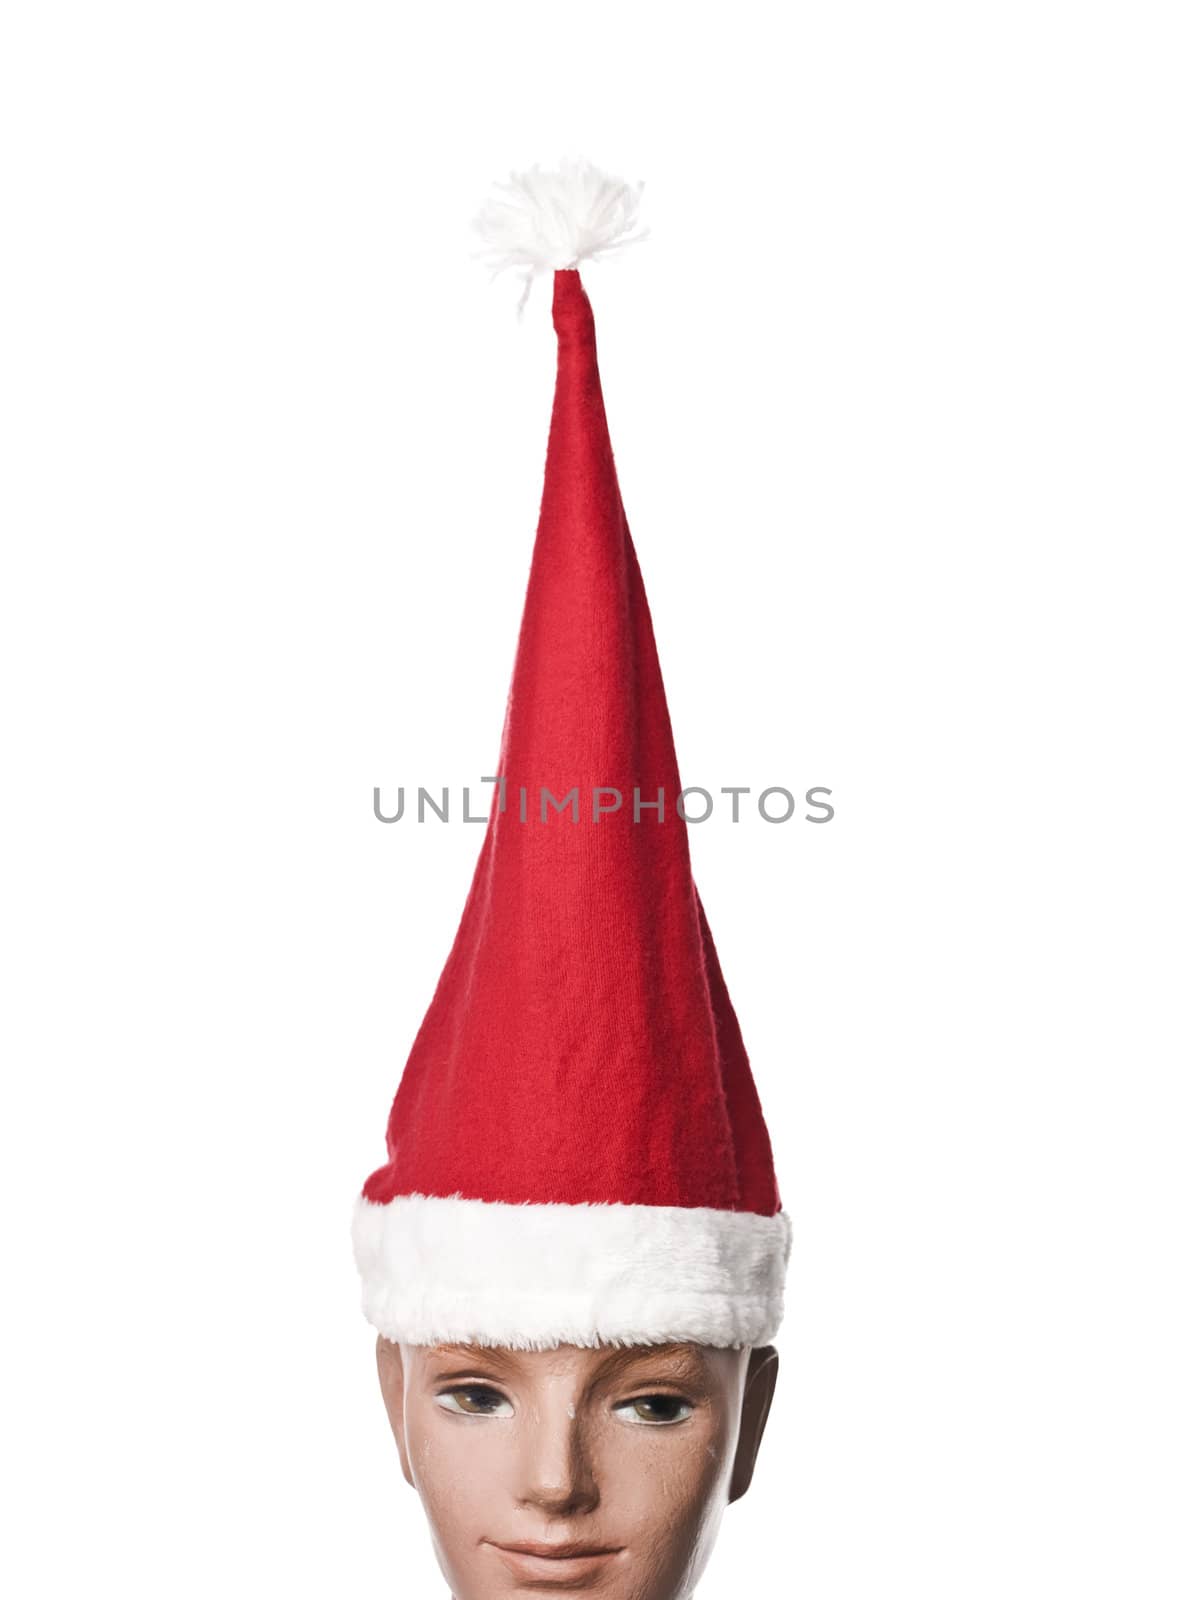 Santa claus hat on a doll by gemenacom